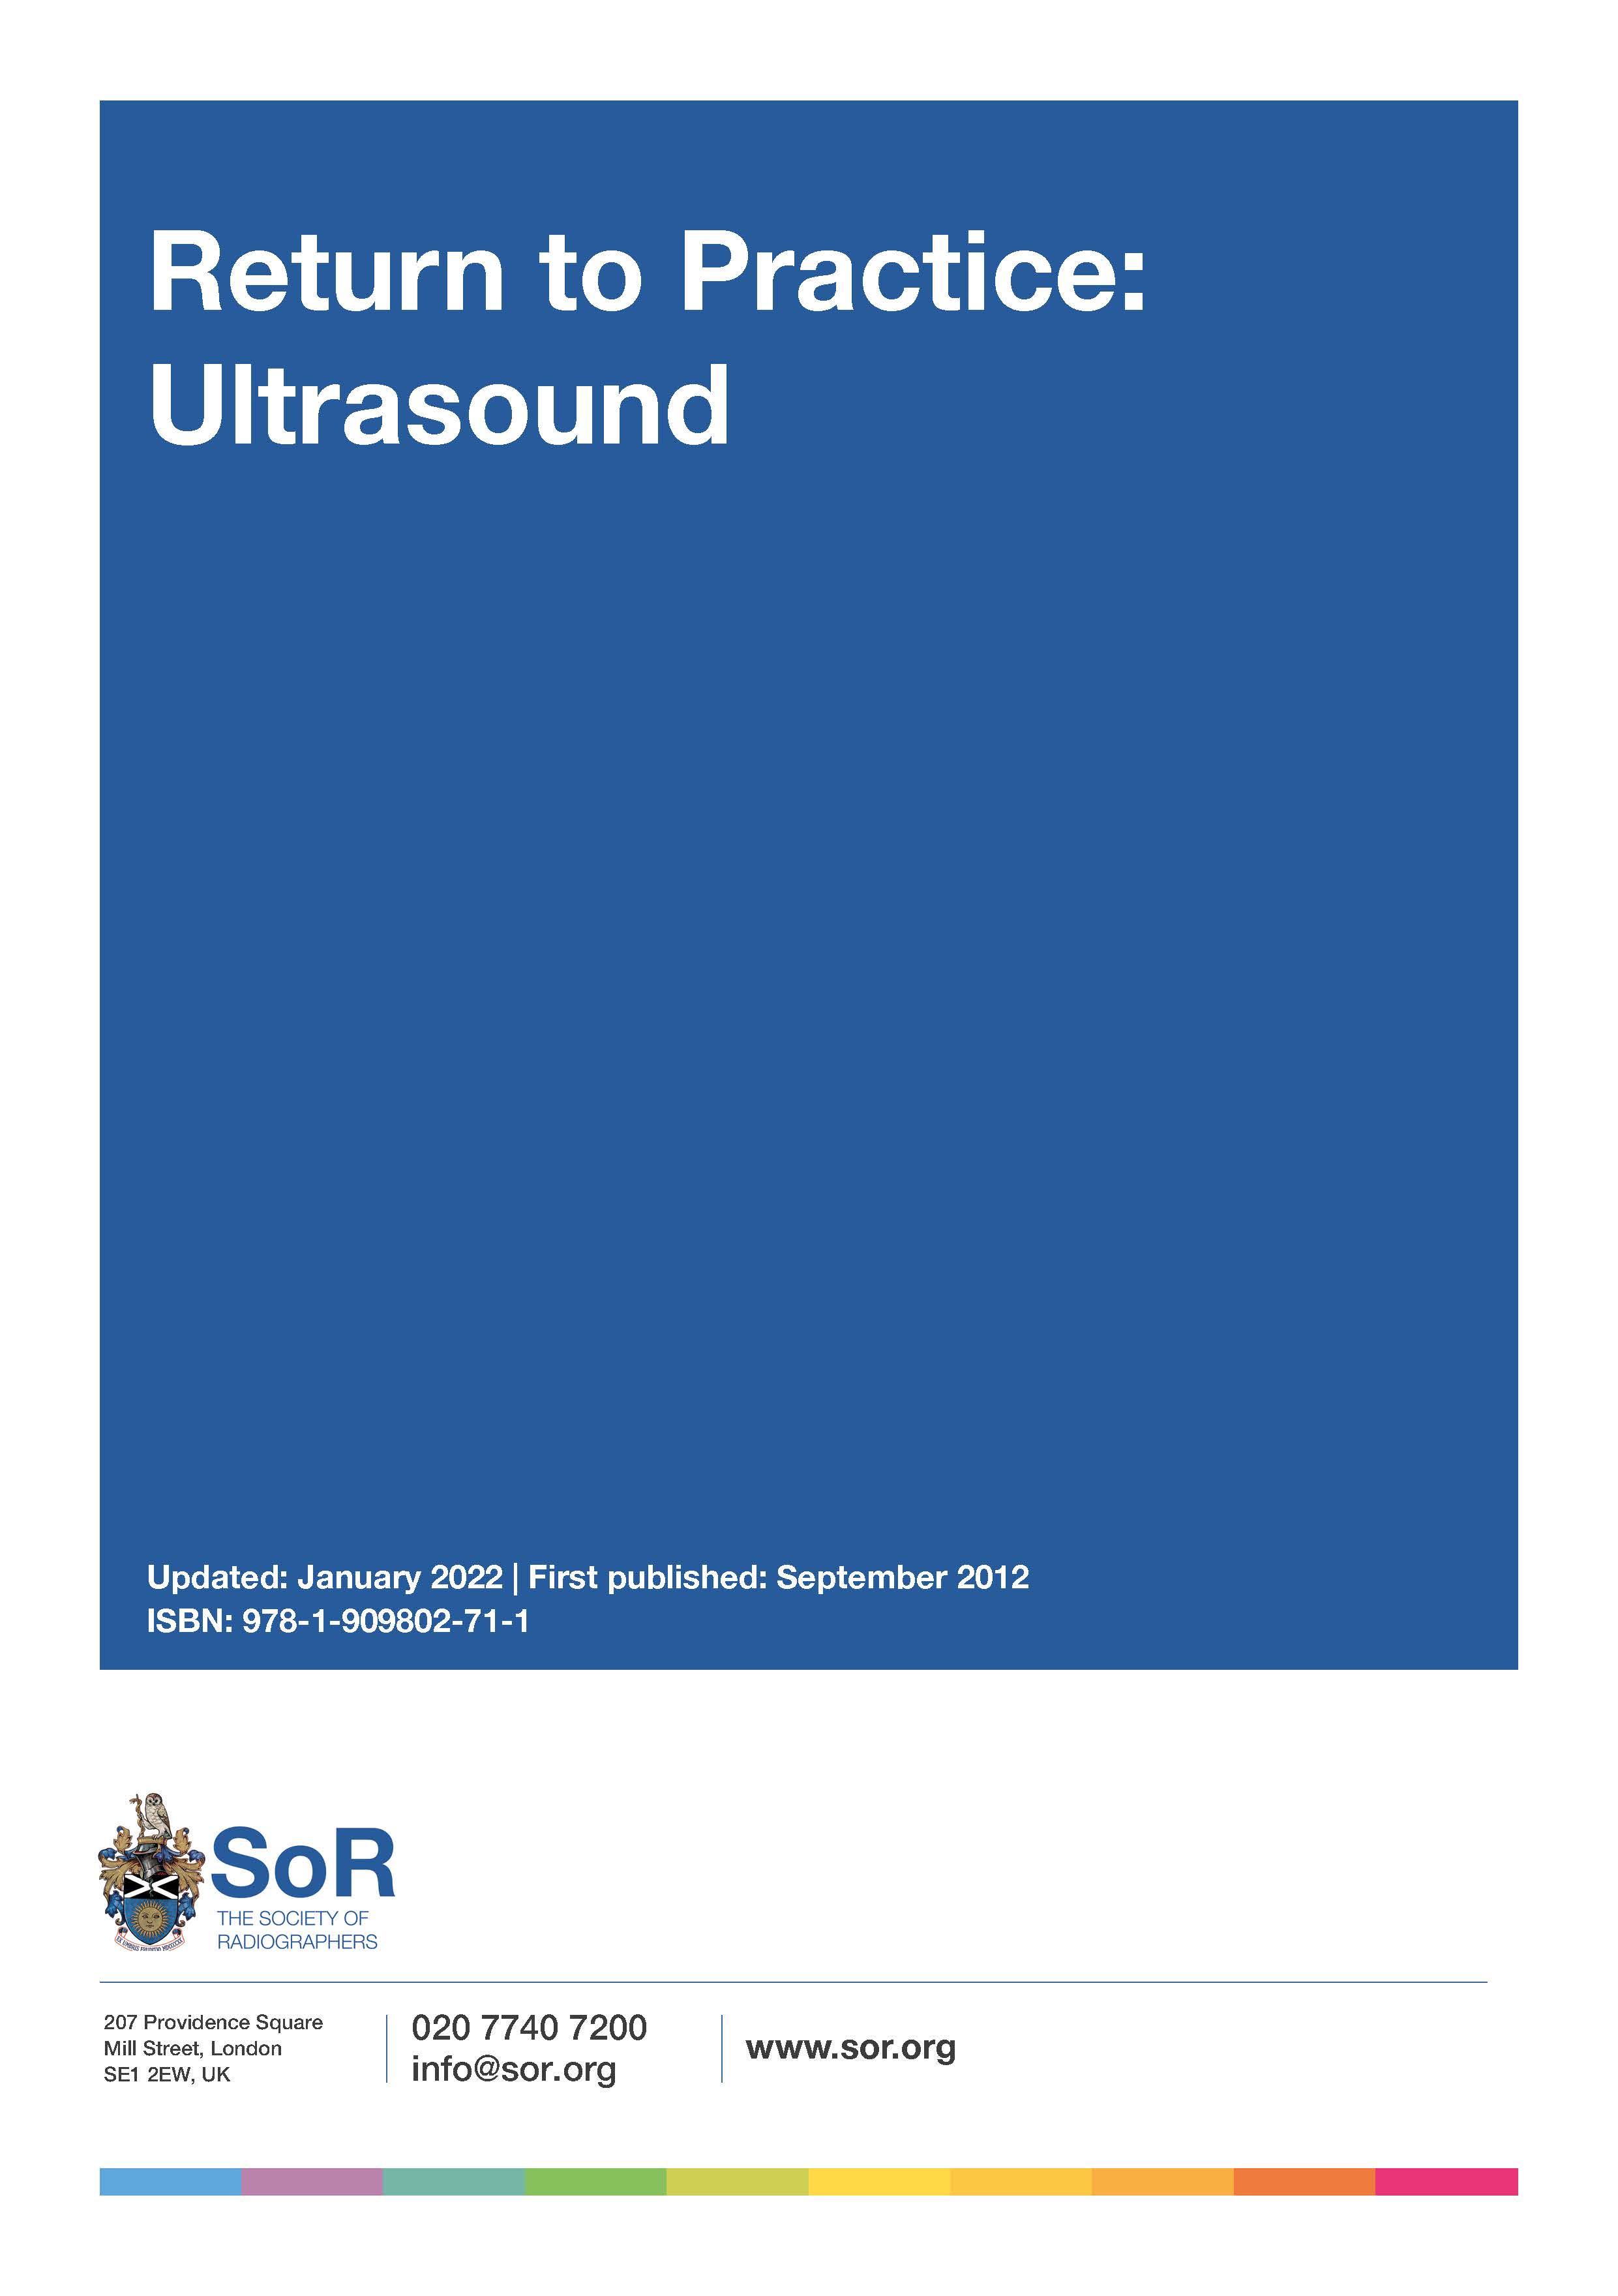 Return to Practice: Ultrasound